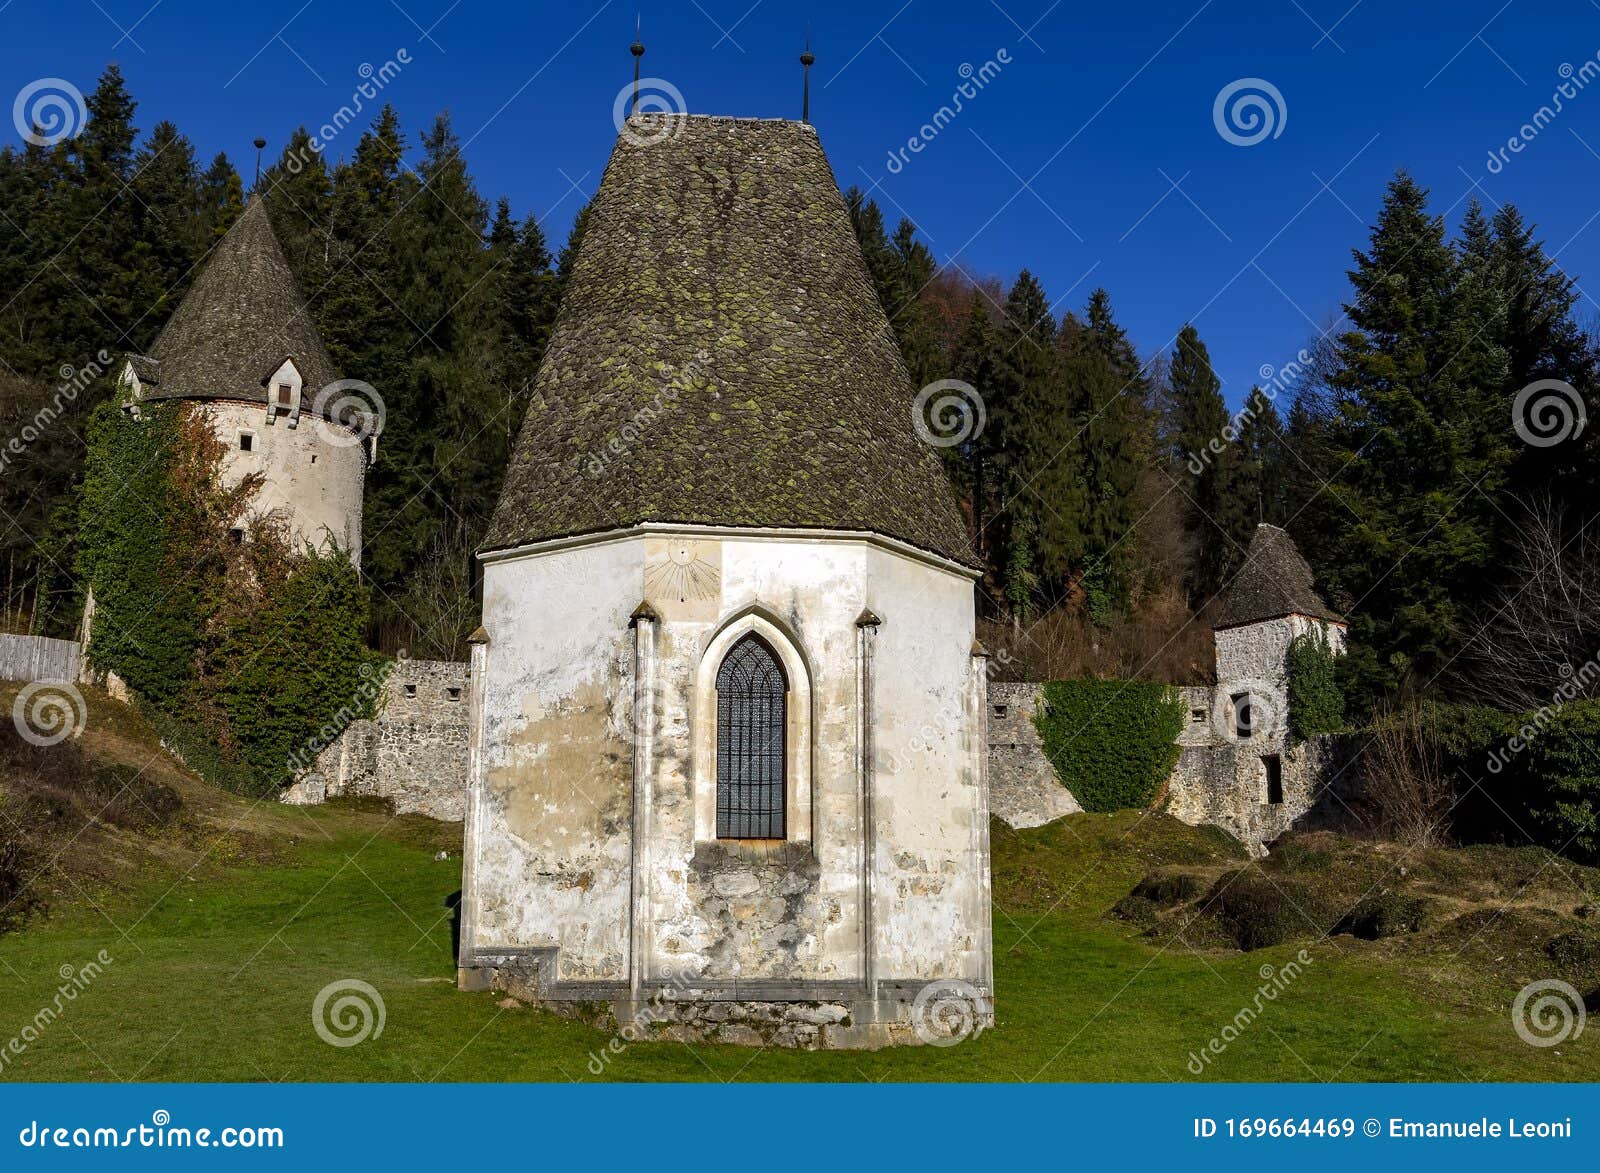 zicka kartuzija zice charterhouse carthusian monastery in slovenia, europe